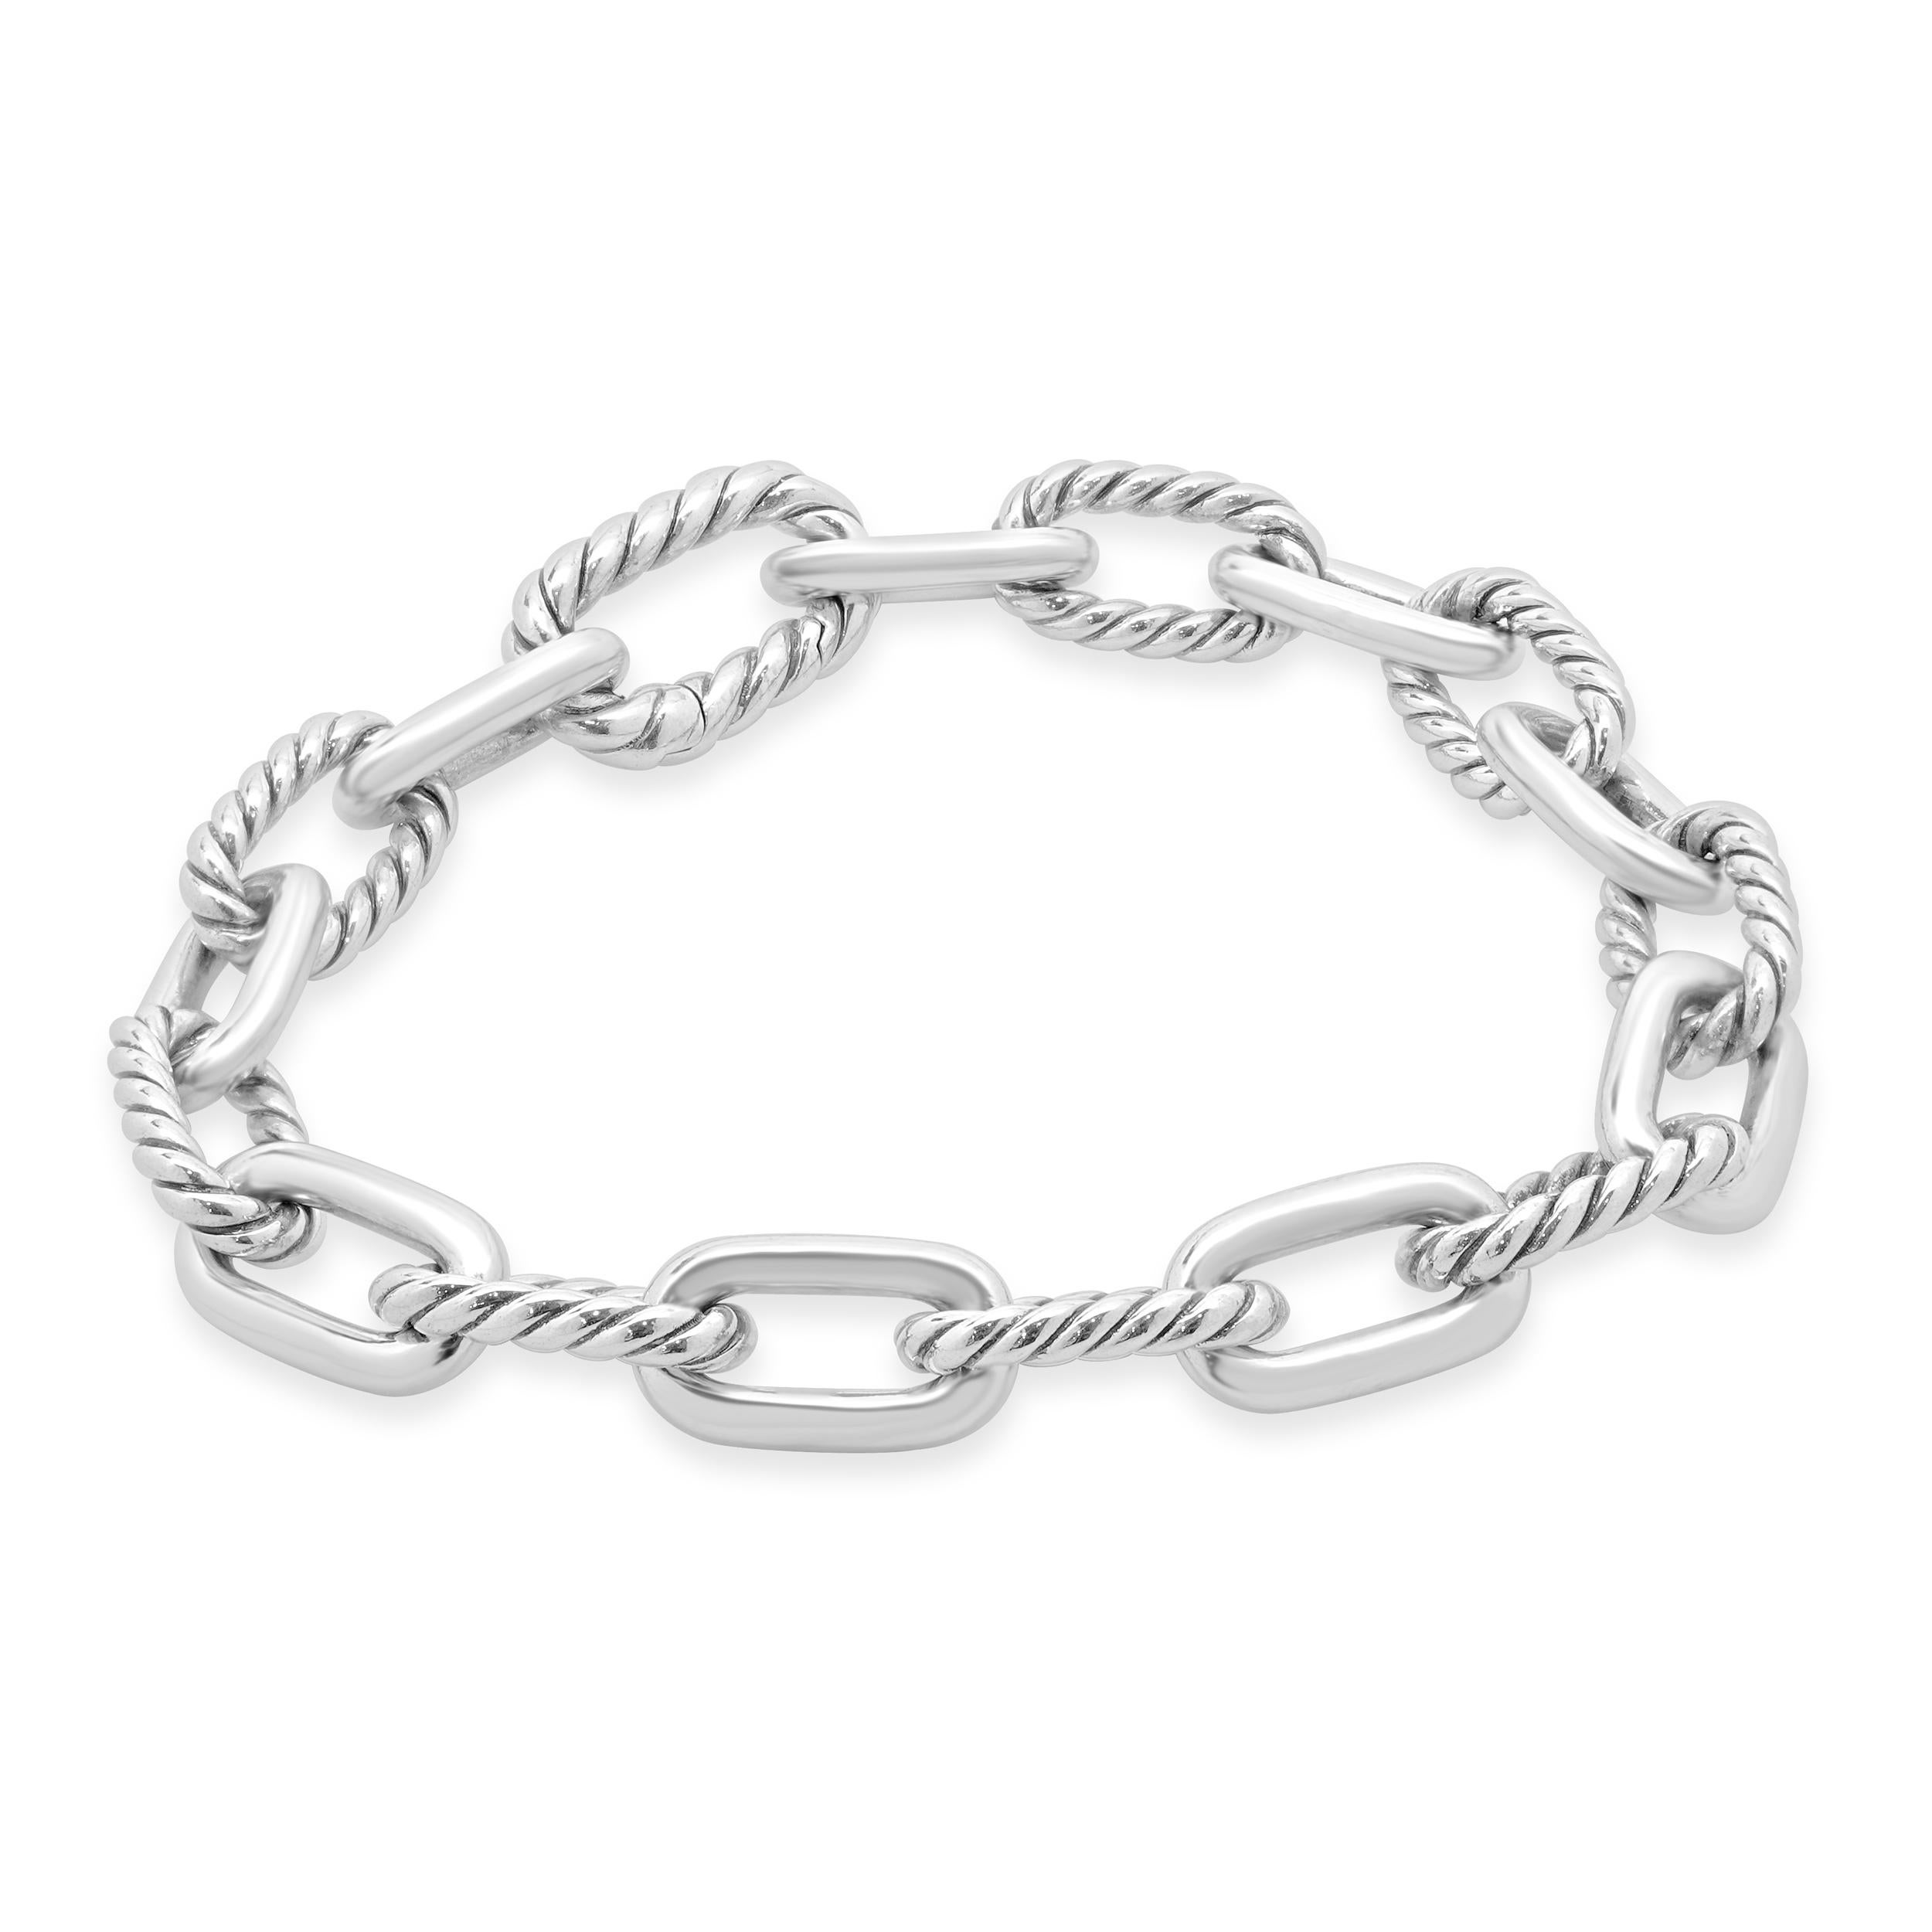 Designer: David Yurman
Material: sterling silver
Dimensions: bracelet measures 7.5-inches 
Weight: 26.98 grams
